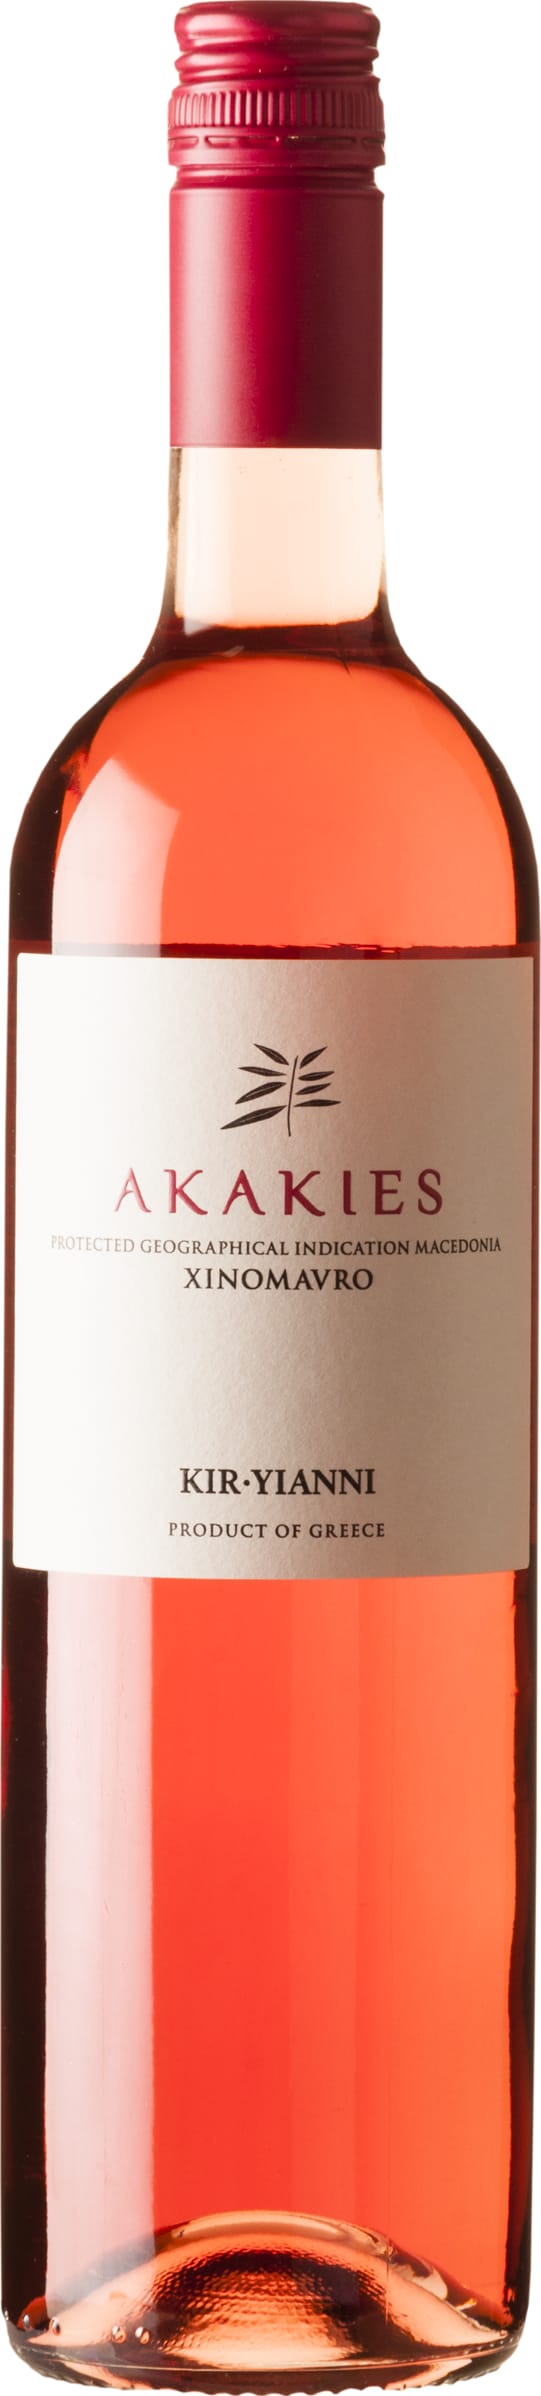 Kir-Yianni Akakies Xinomavro Rose 2022 75cl - Buy Kir-Yianni Wines from GREAT WINES DIRECT wine shop